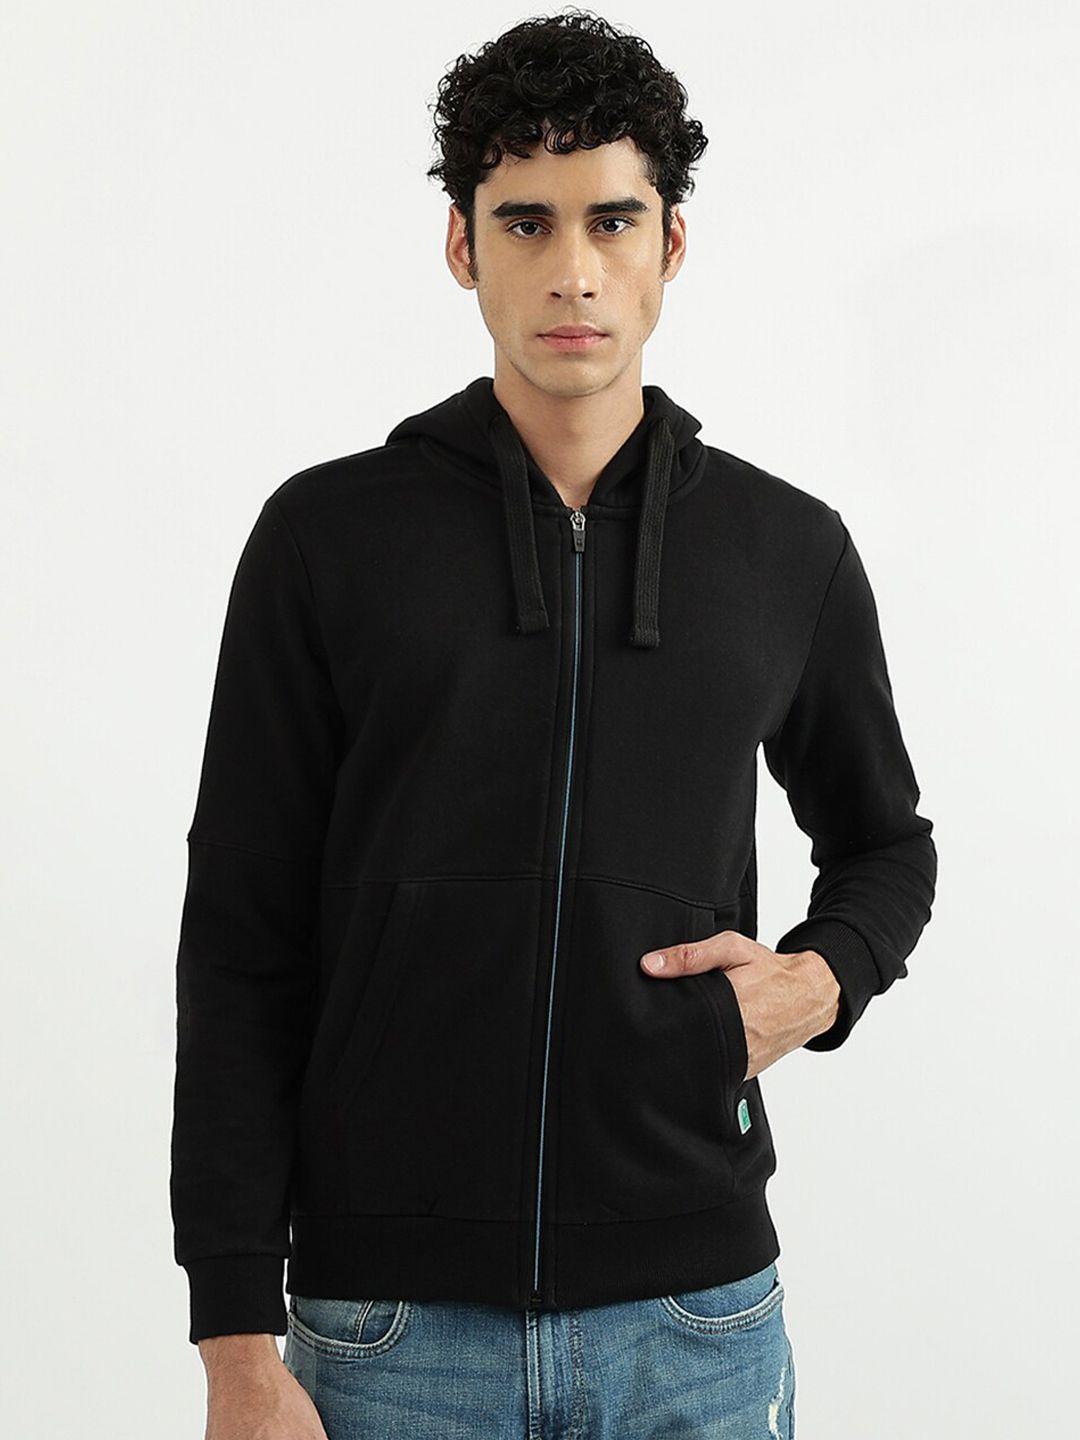 united-colors-of-benetton-men-black-hooded-sweatshirt